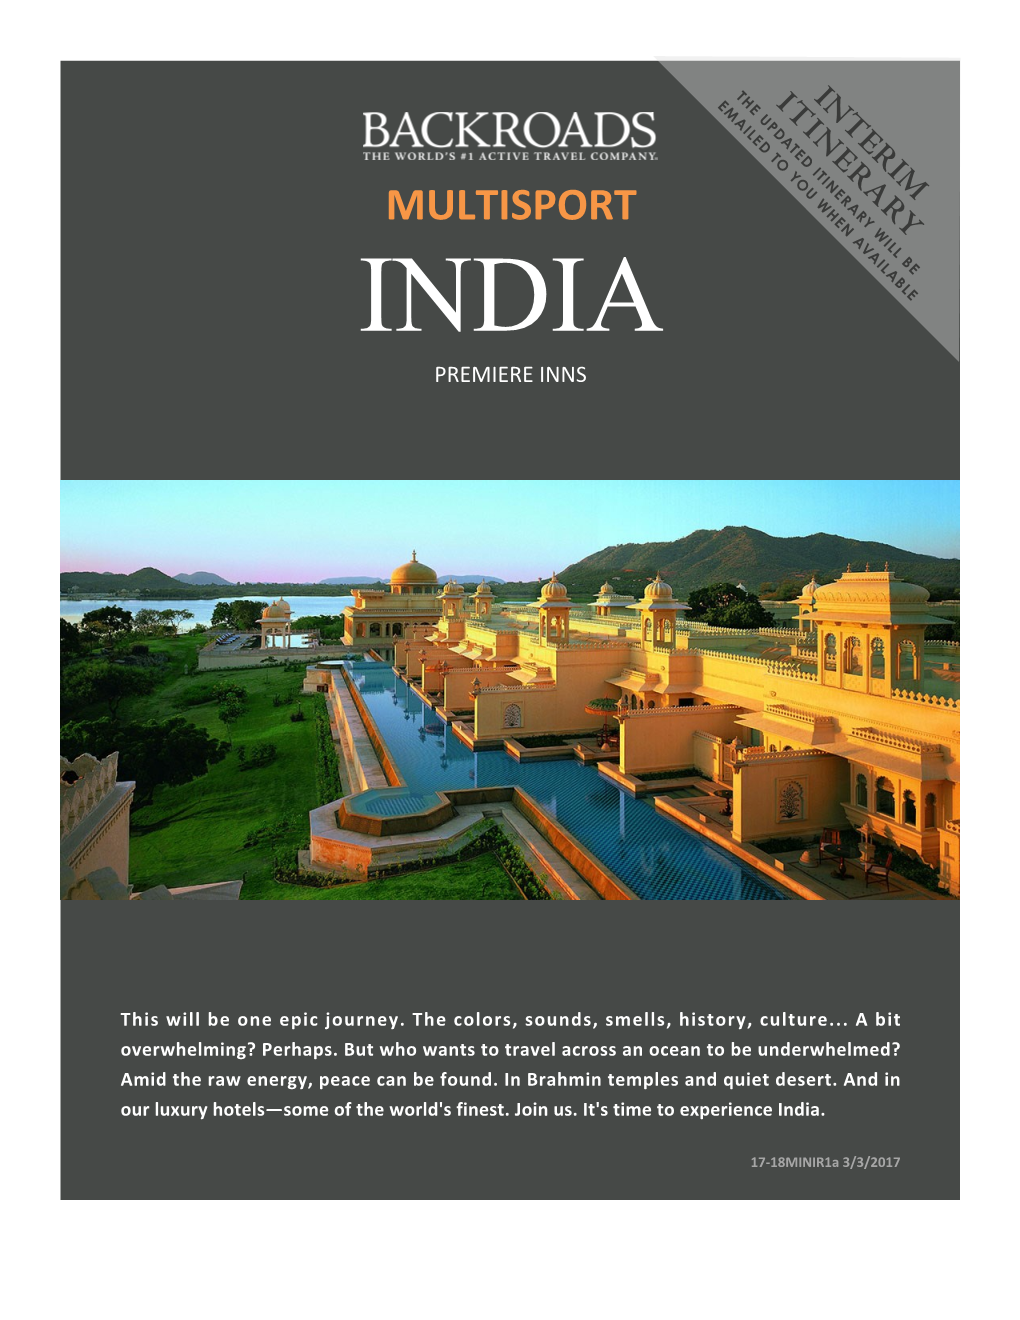 Multisport Ry India Premiere Inns